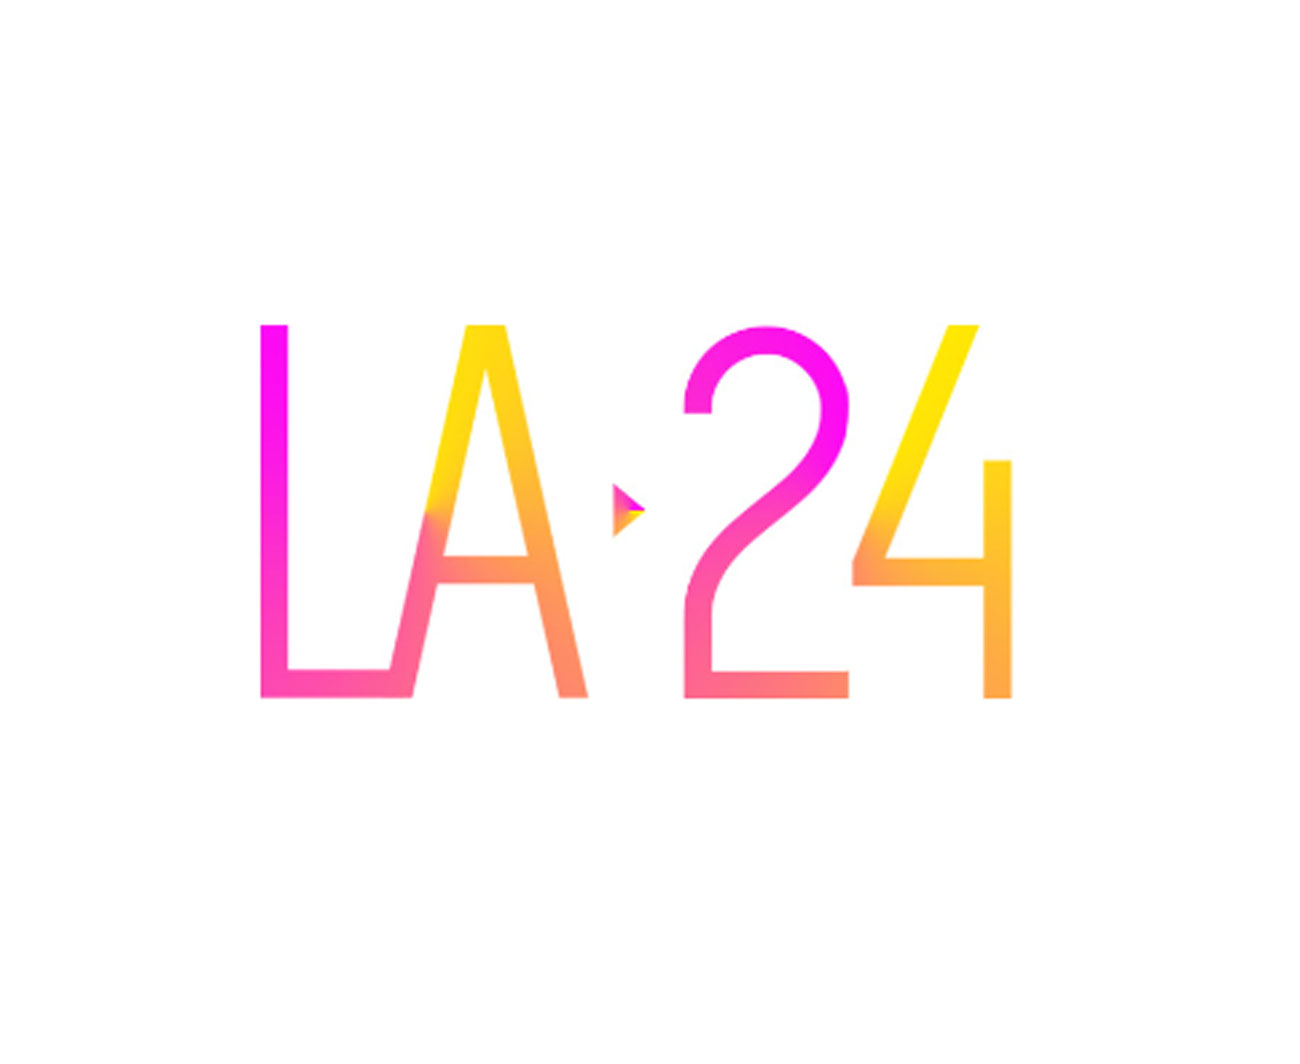 Los Angeles 2024 